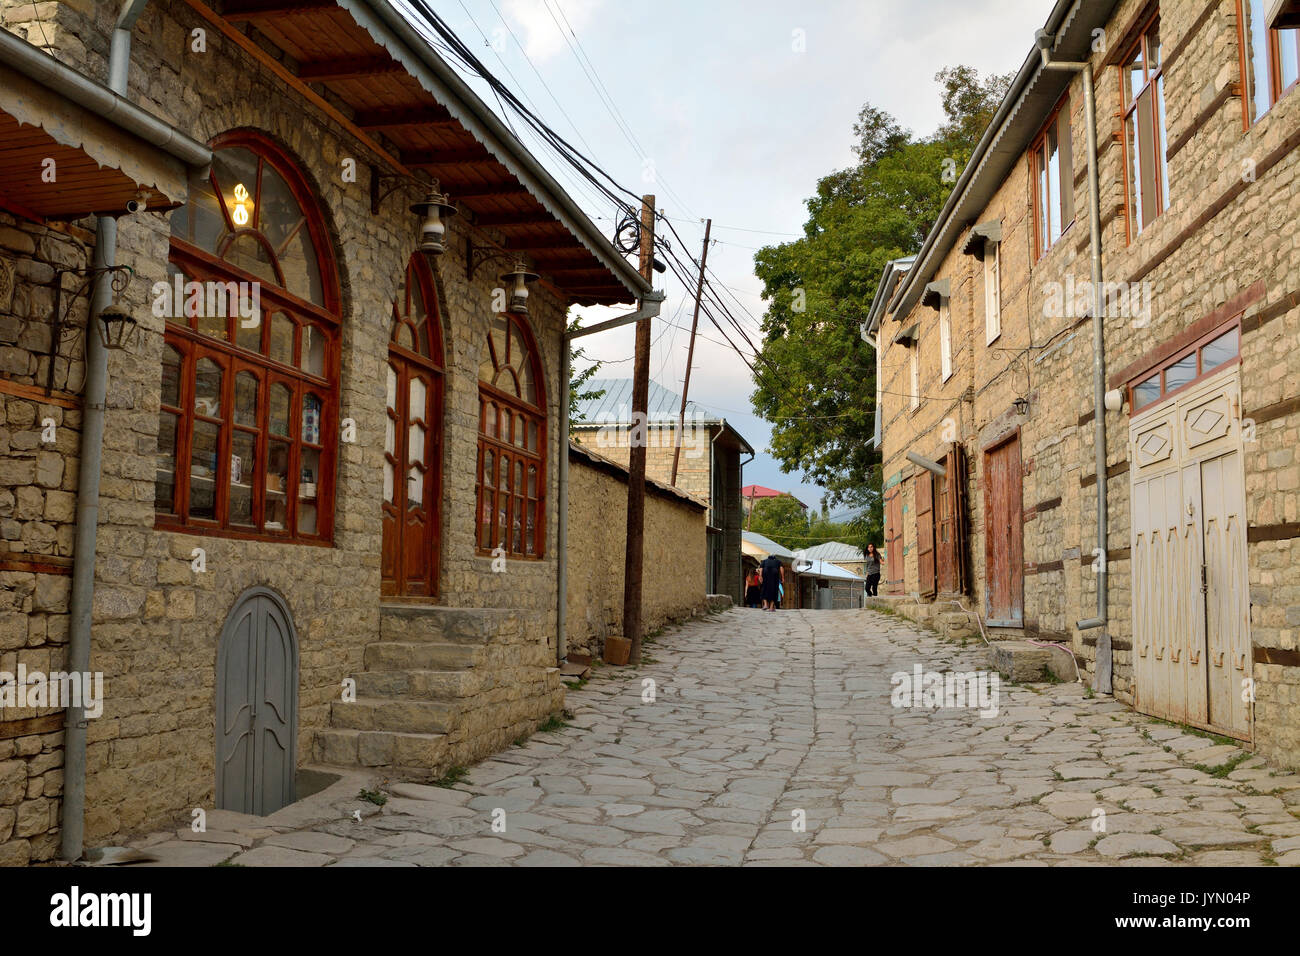 Street view on cobblestone Huseynov street, the main street of Lahic mountainous village of Azerbaijan Stock Photo